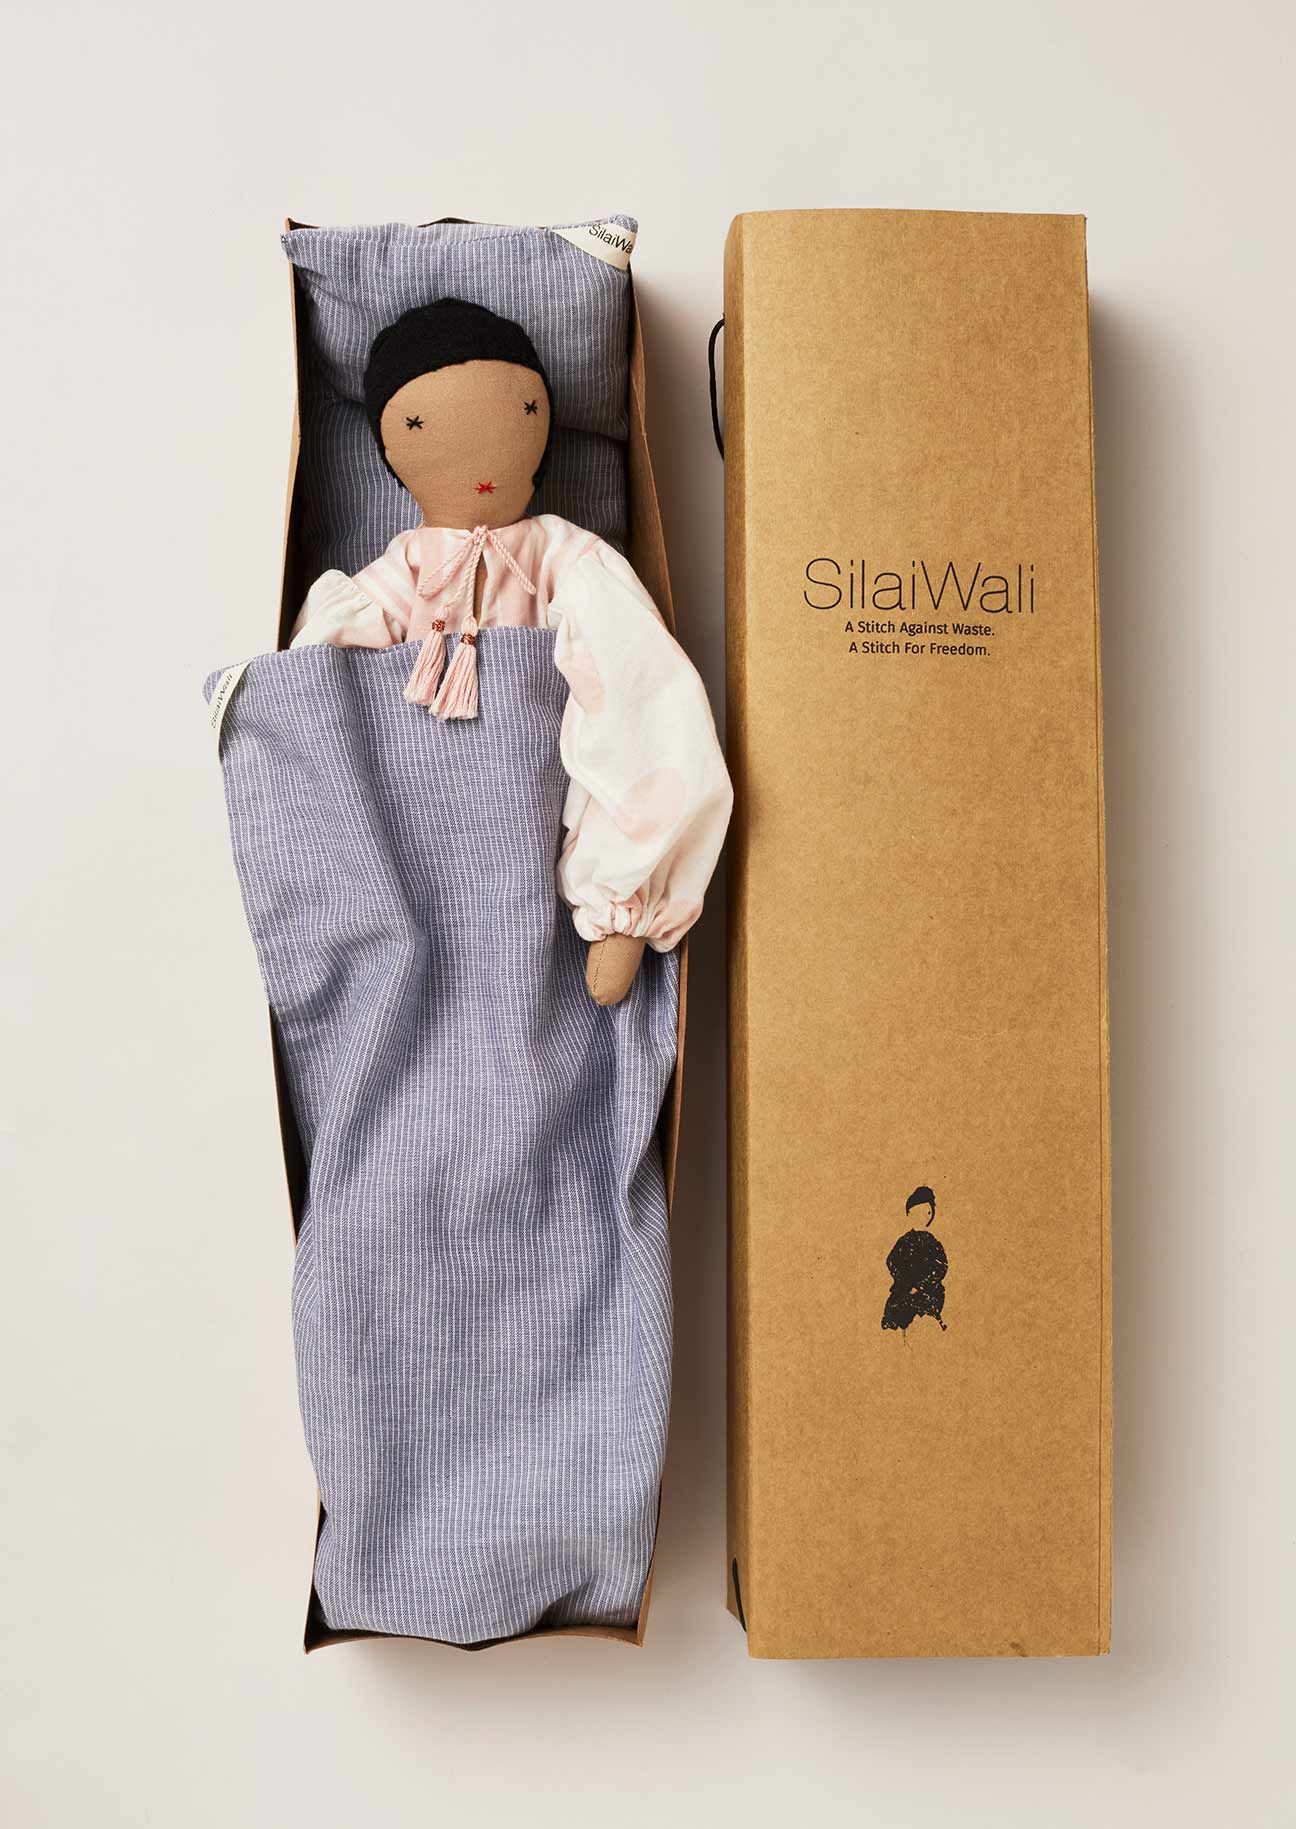 Bibi Upcycled Handmade Doll